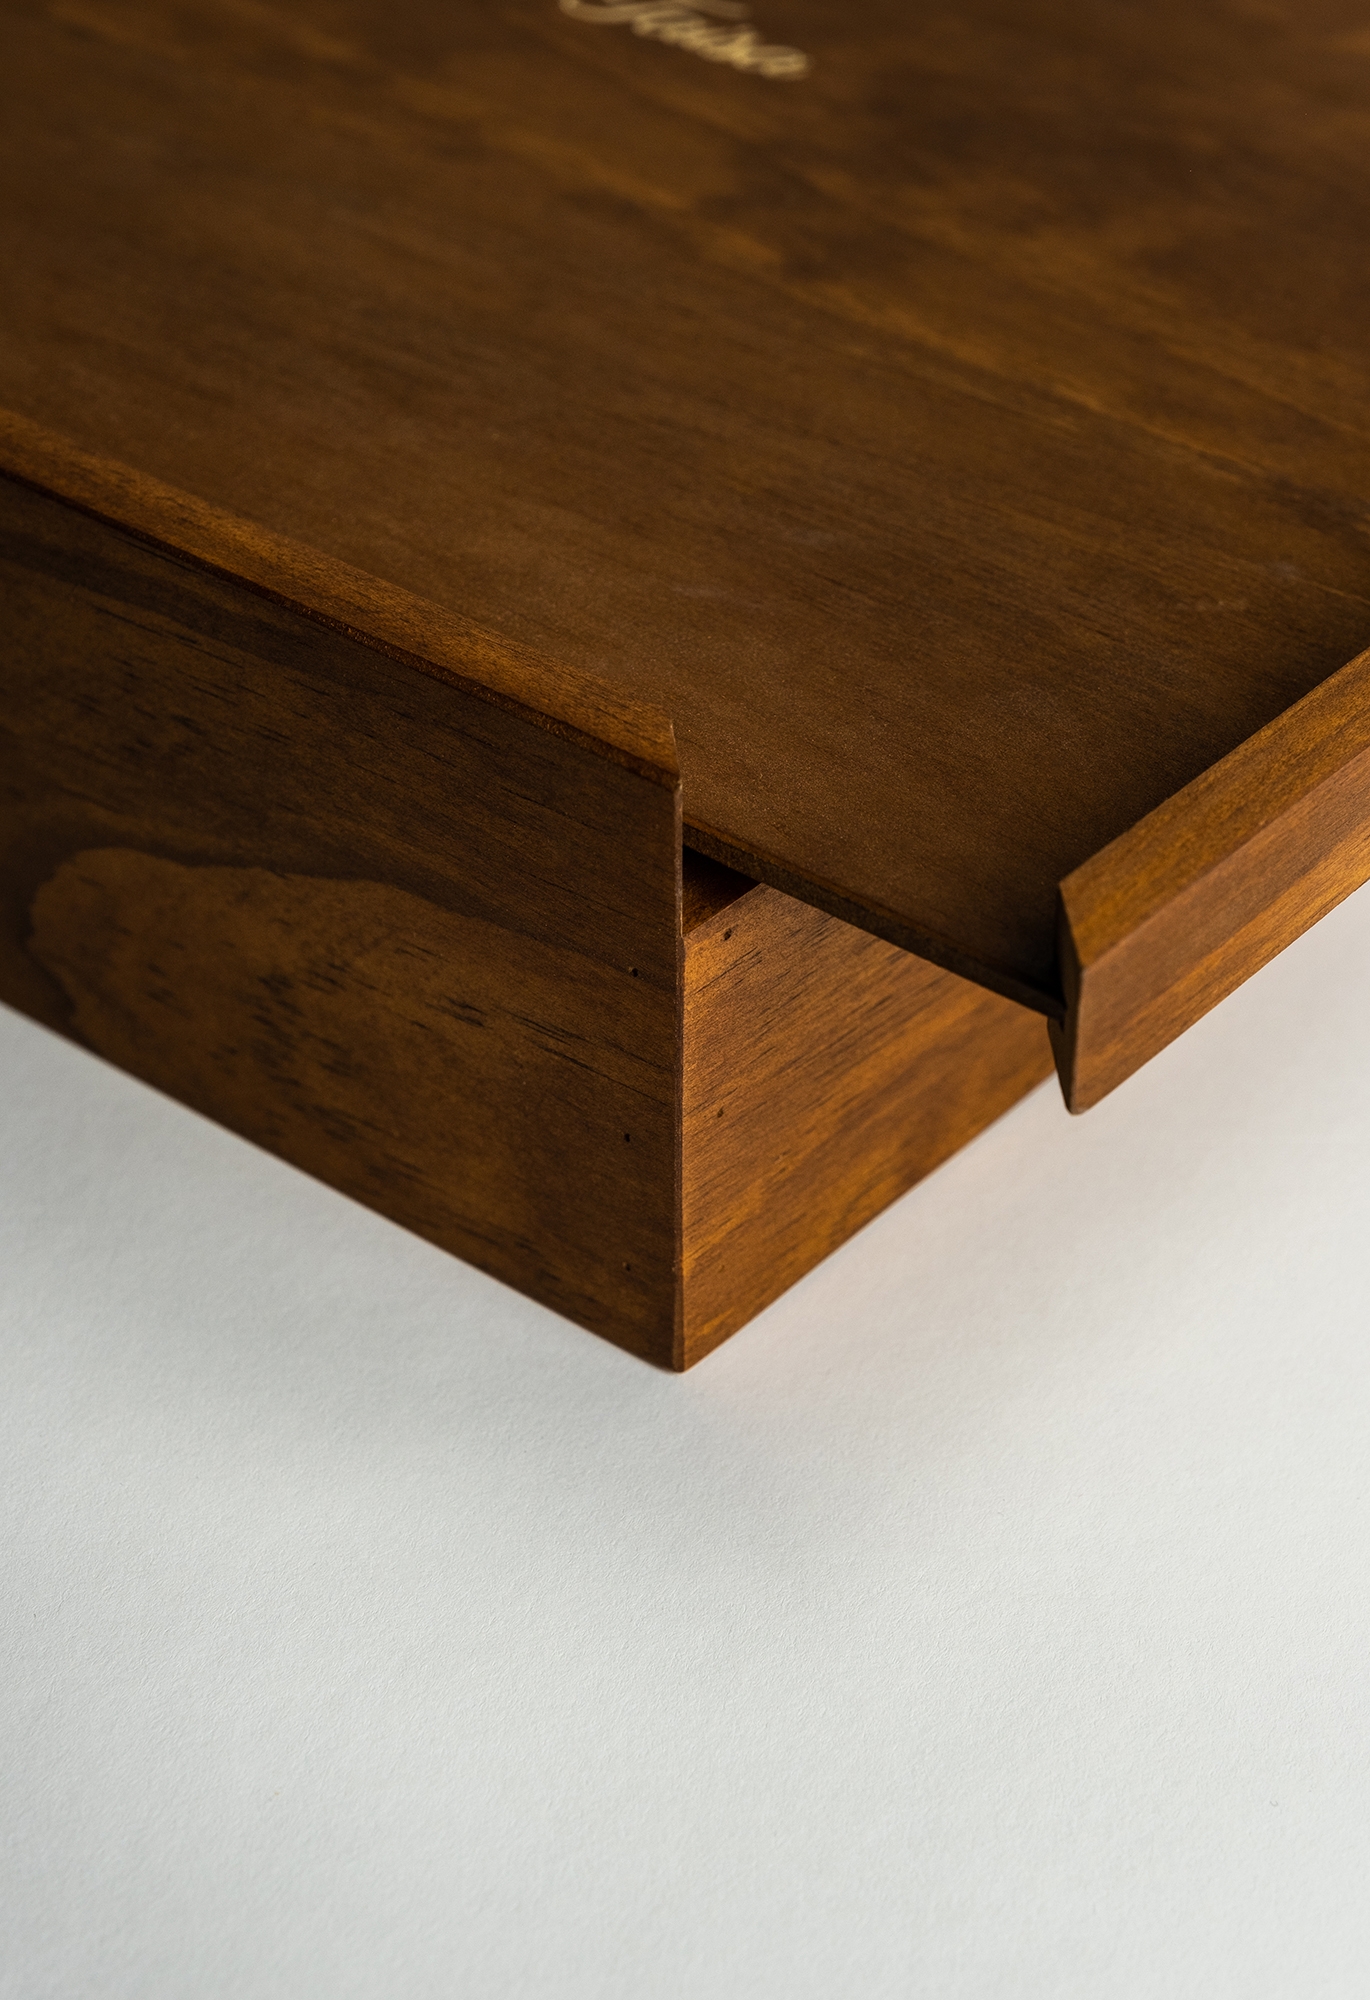 Wood Box Konstruktive Details 2